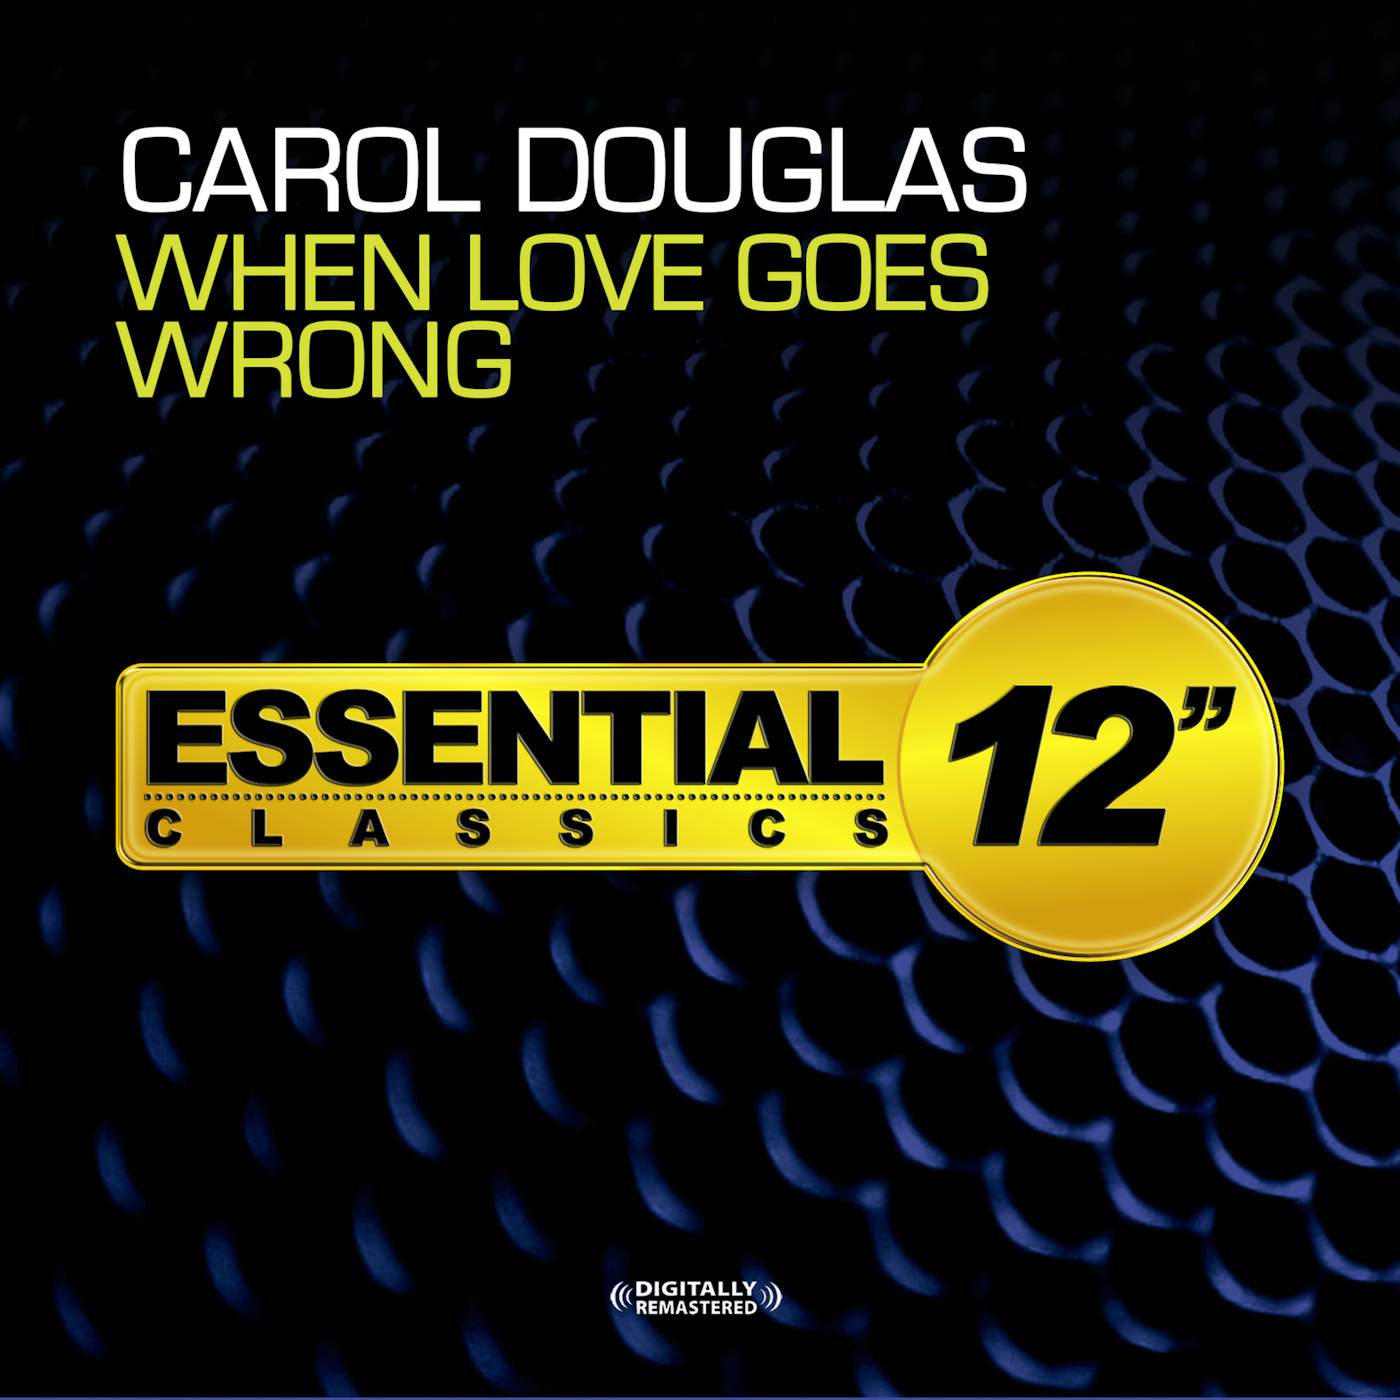 Carol Douglas WHEN LOVE GOES WRONG CD